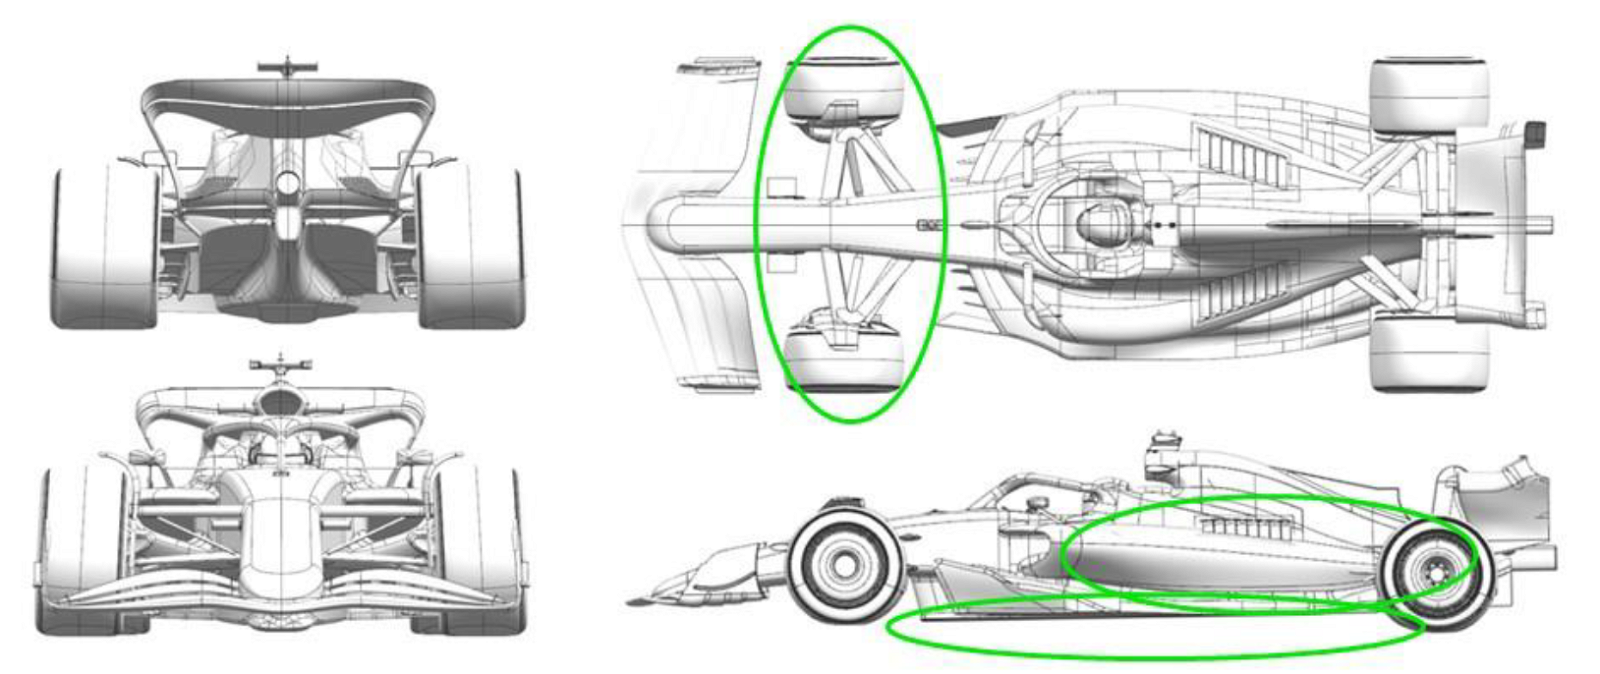 Sauber C44. Image: FIA